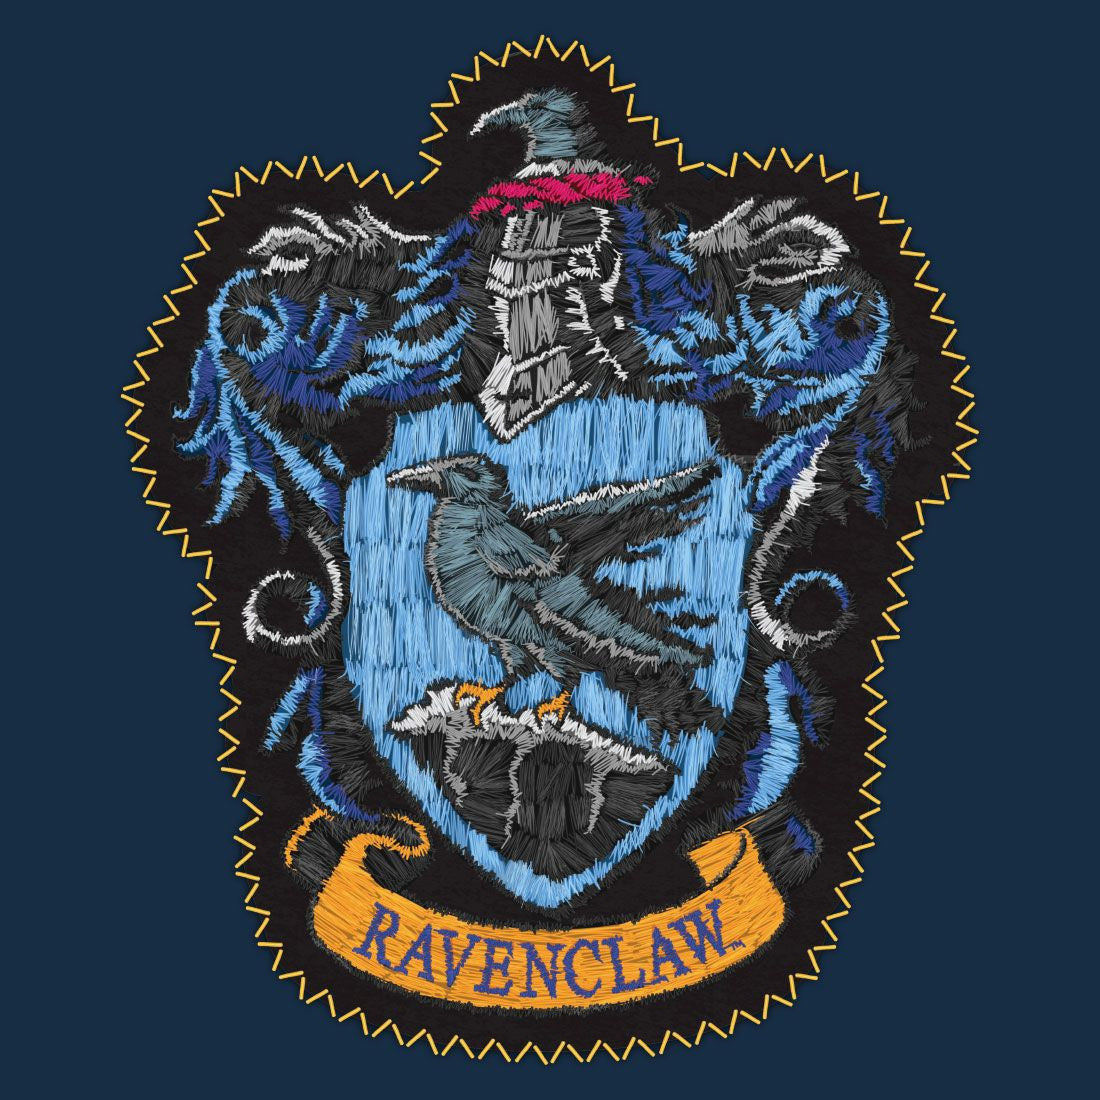 Harry Potter Sweatshirt - Ravenclaw Emblem